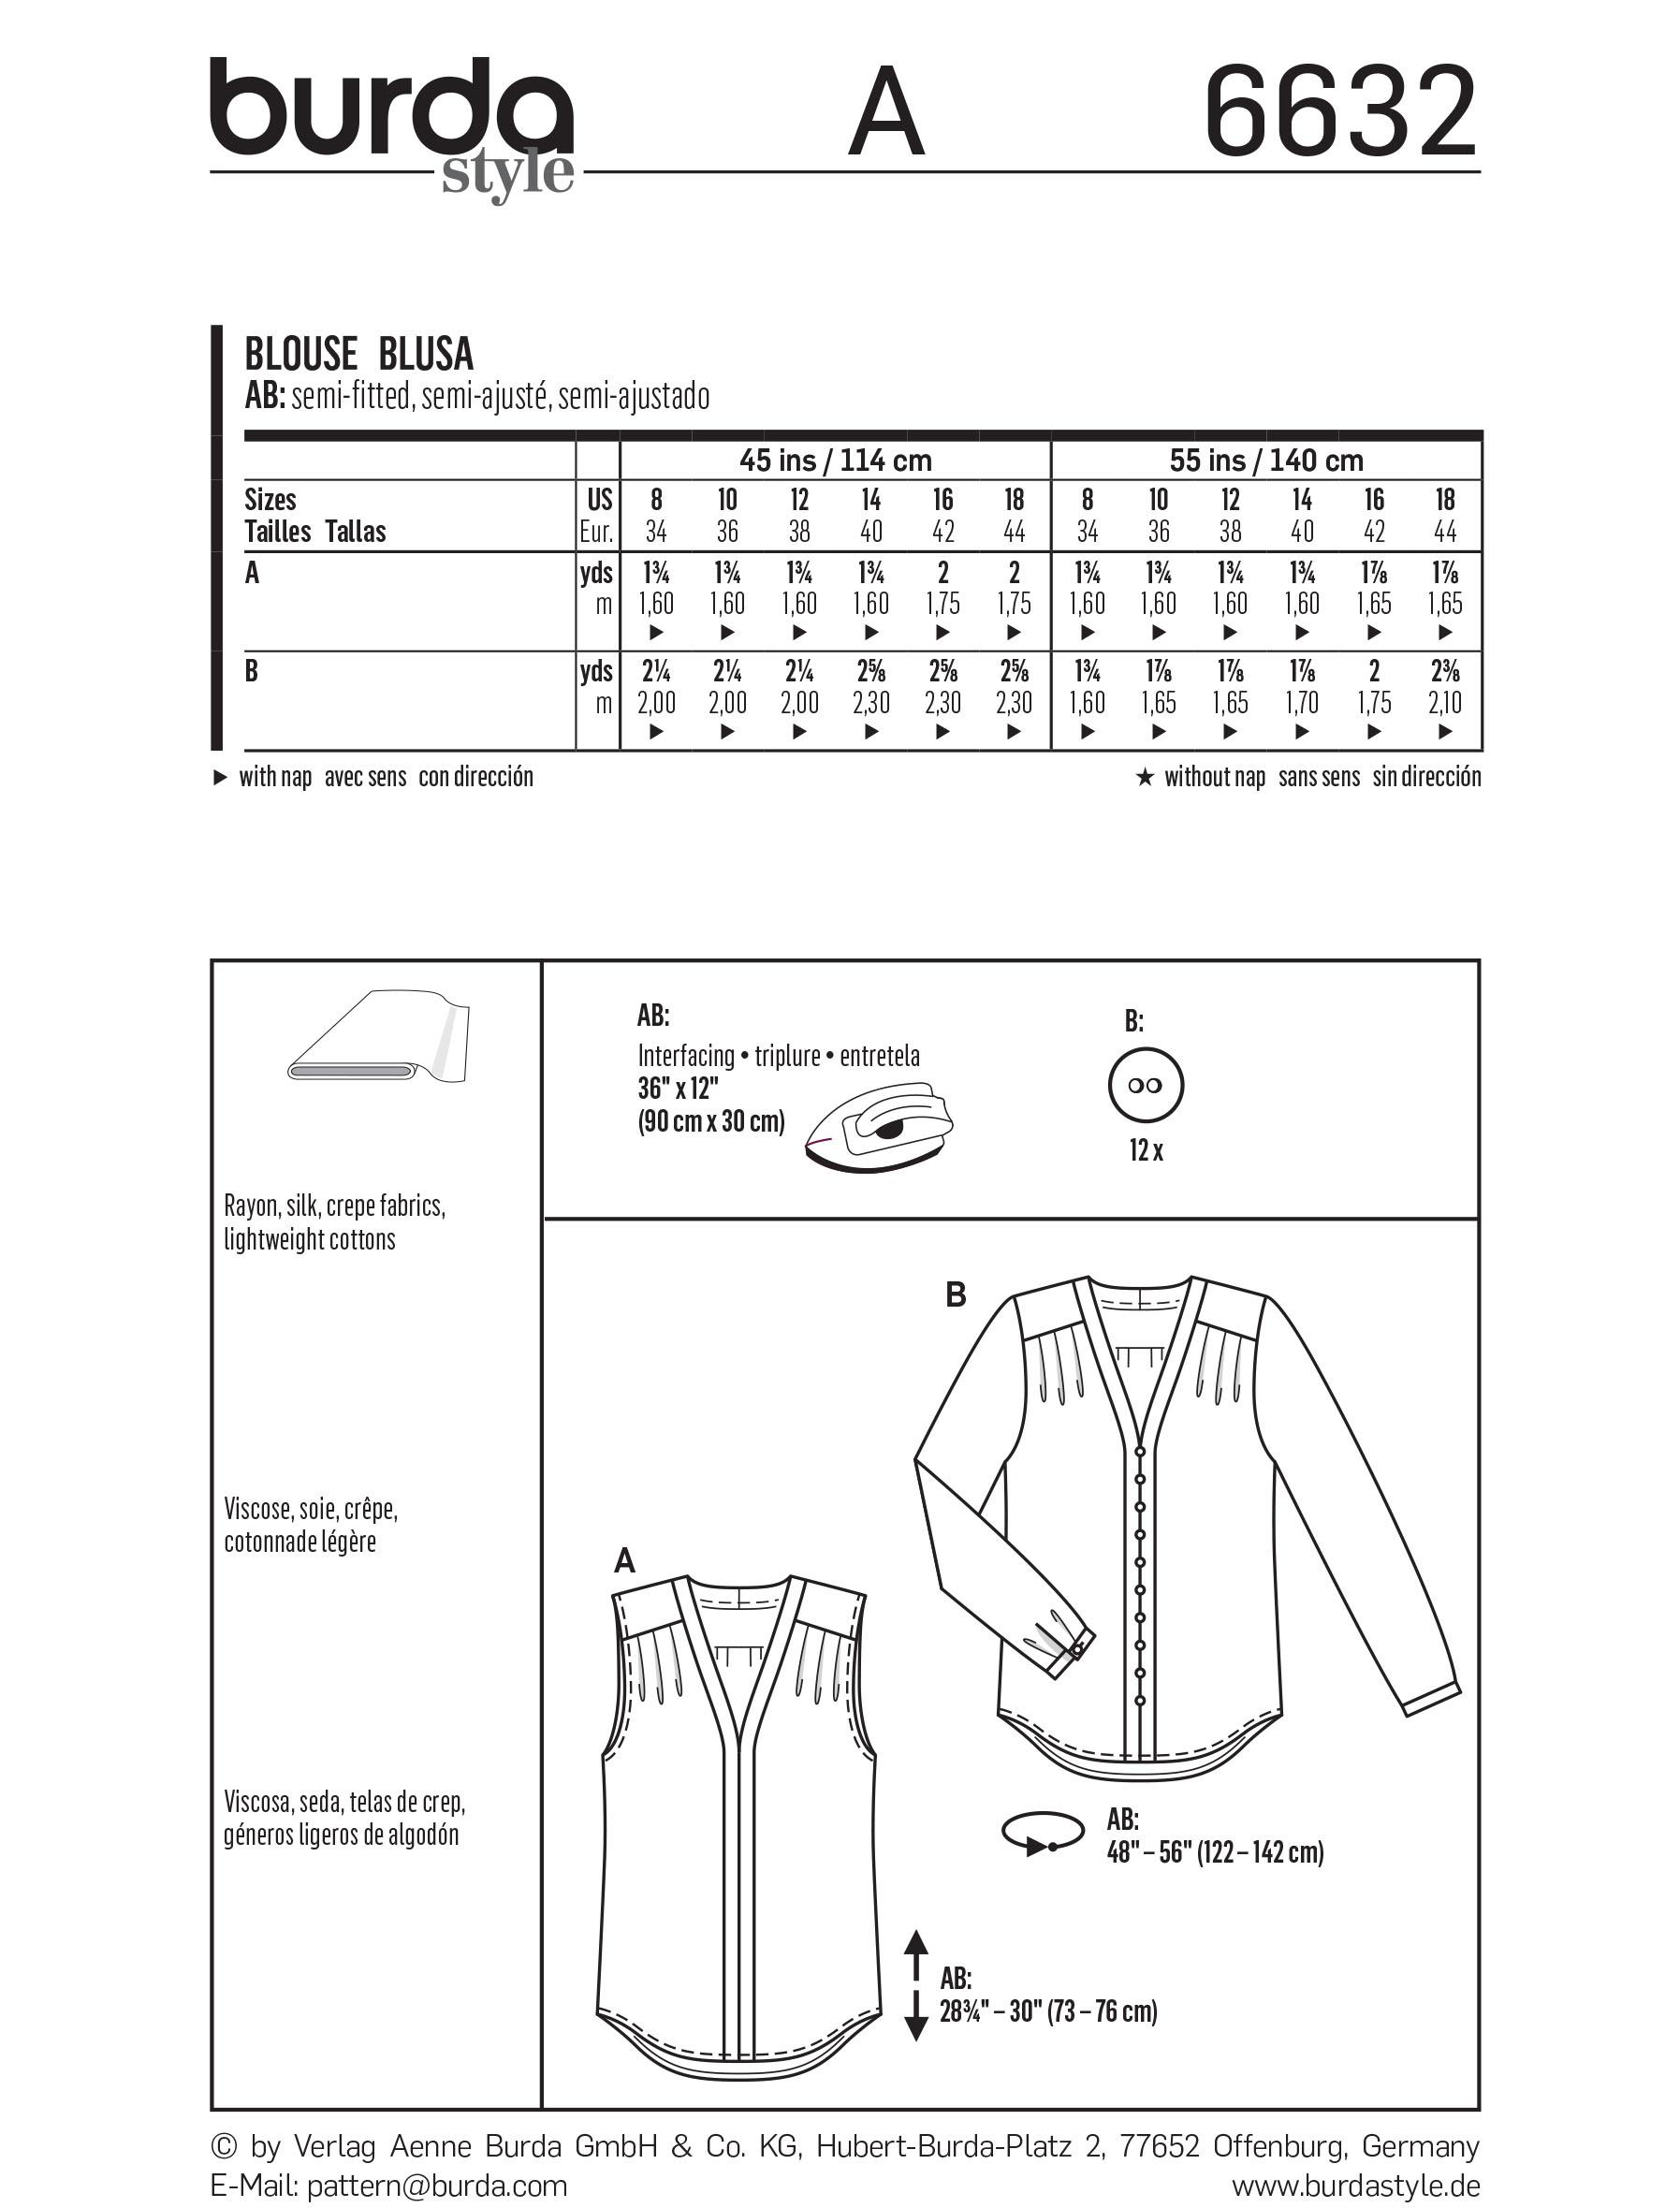 Burda B6632 Women's Blouse Sewing Pattern